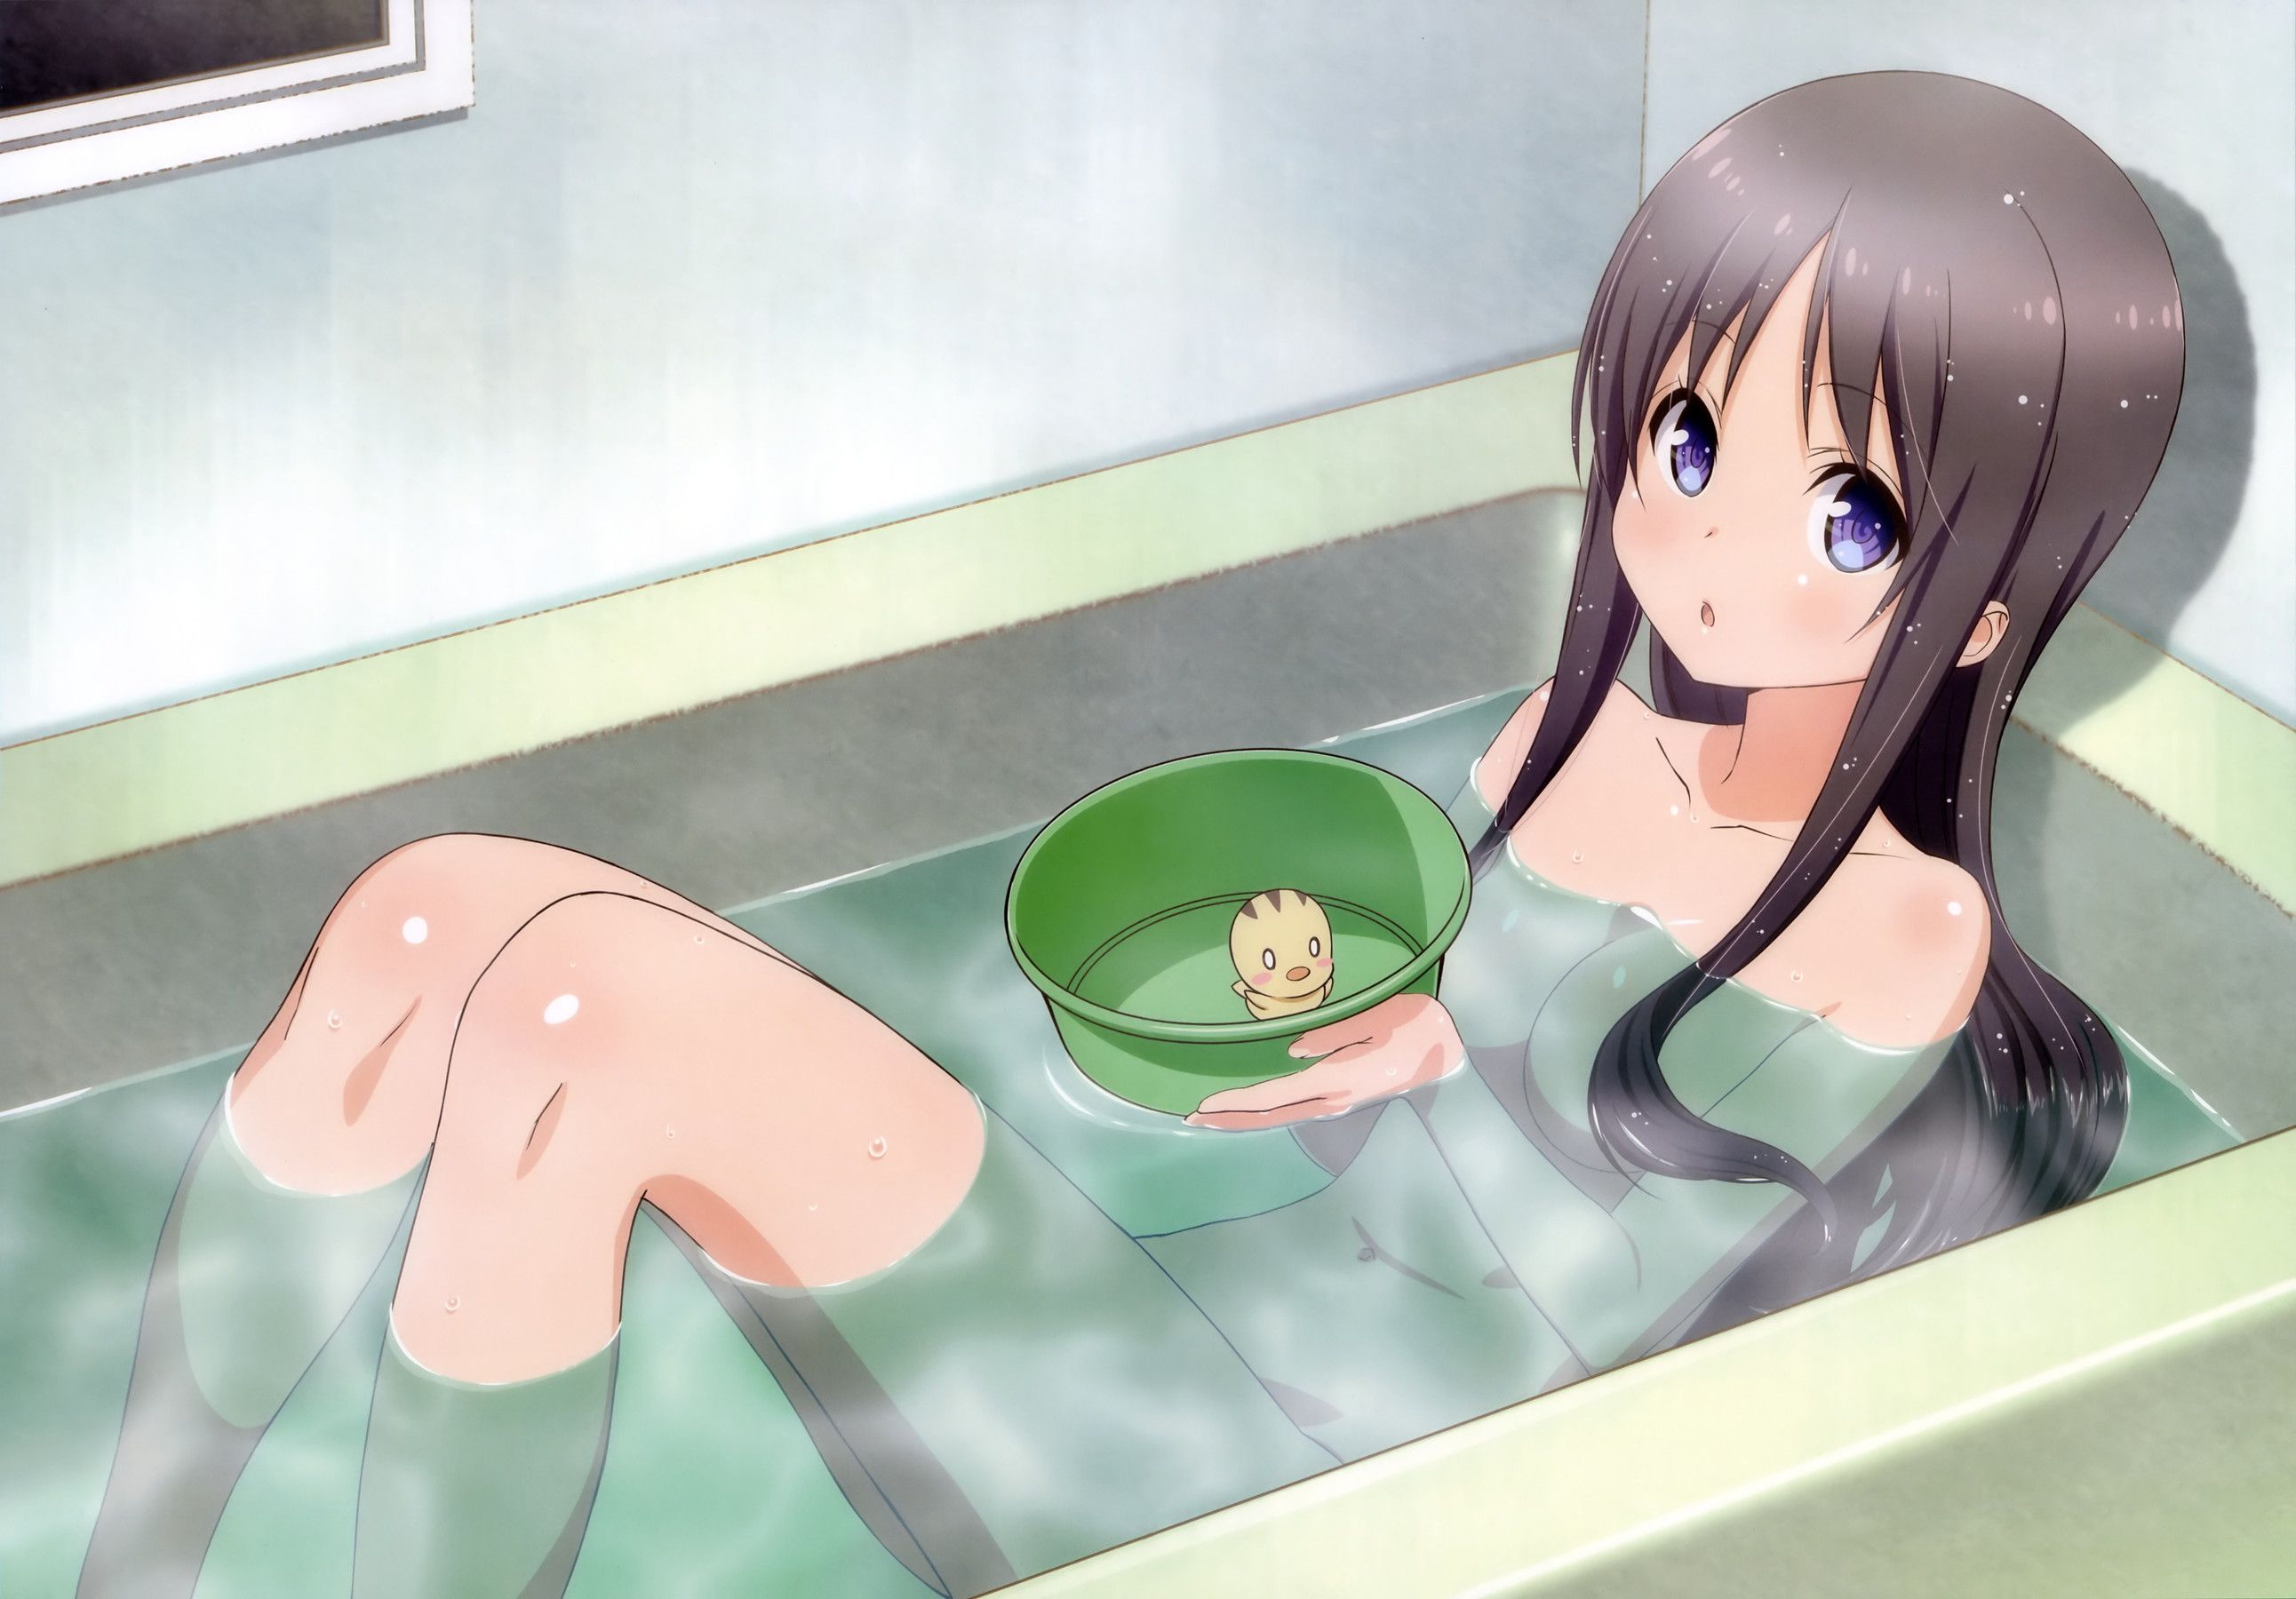 Secondary image shikoreru in bath, hot spring! 15